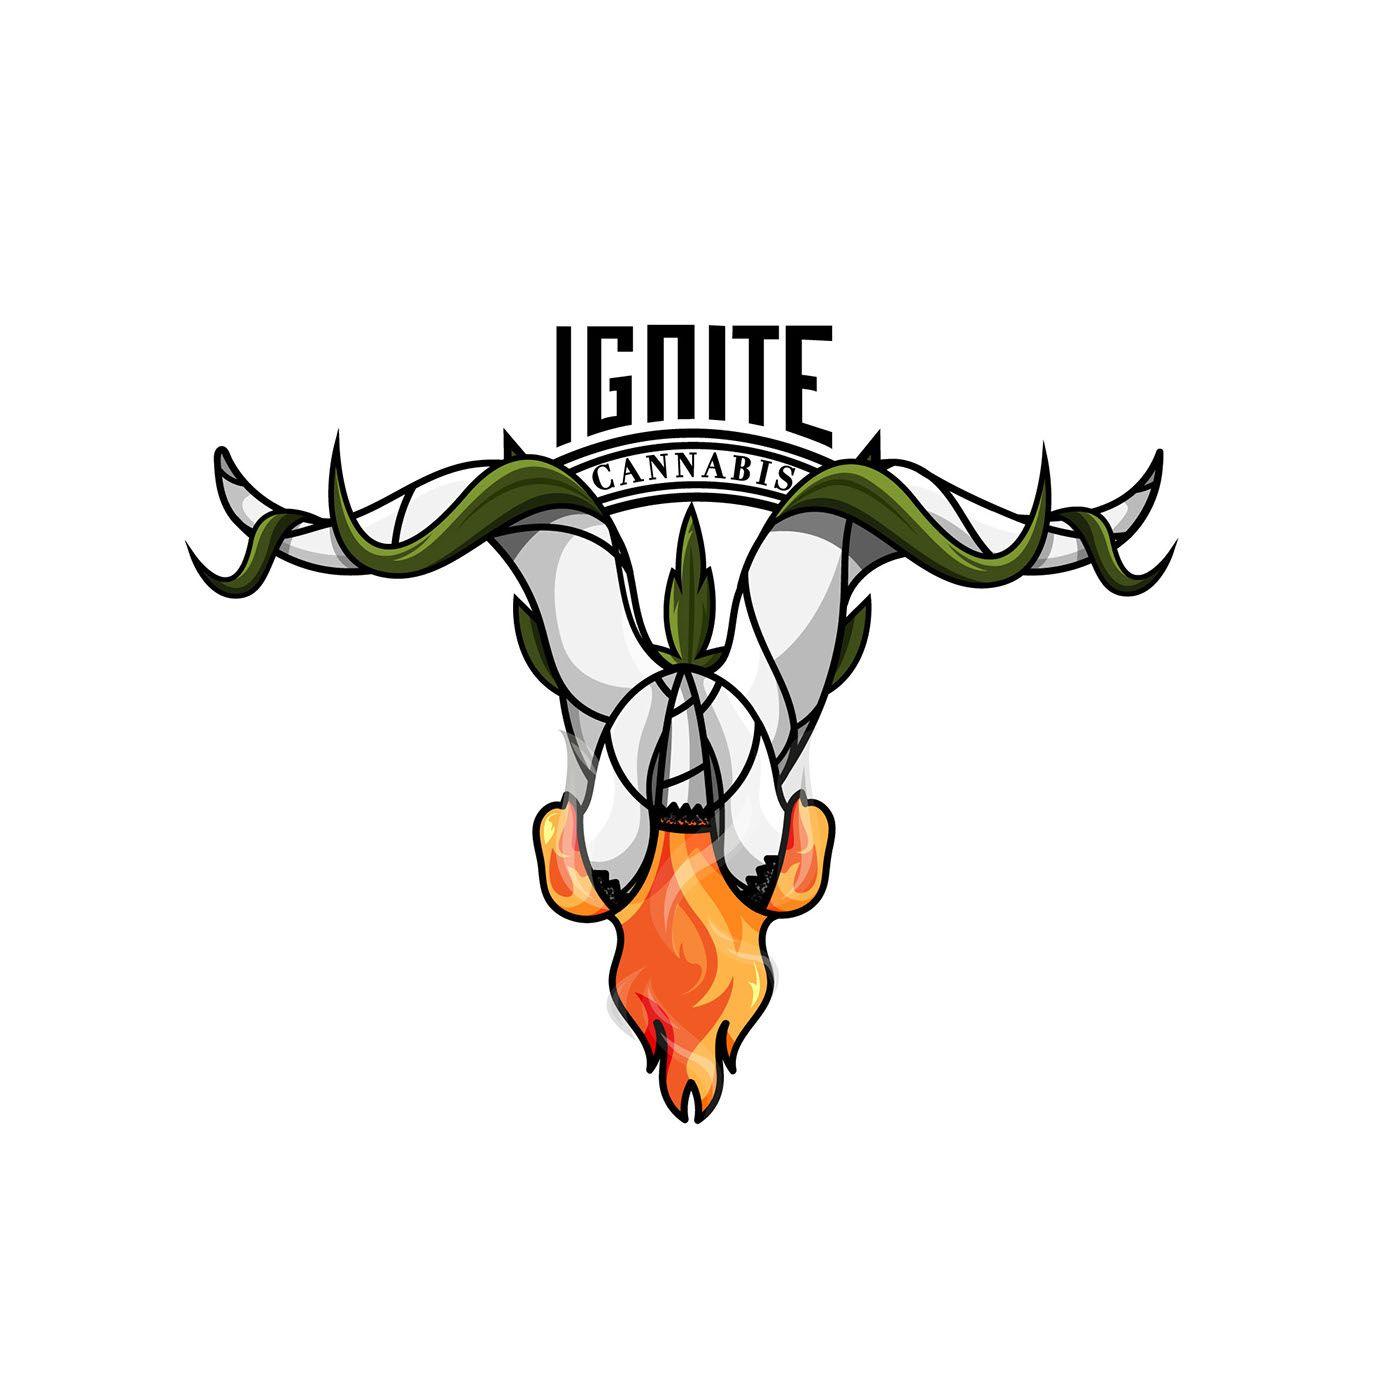 Ignite Logo - IGNITE Cannabis Company Logo Contest on Behance